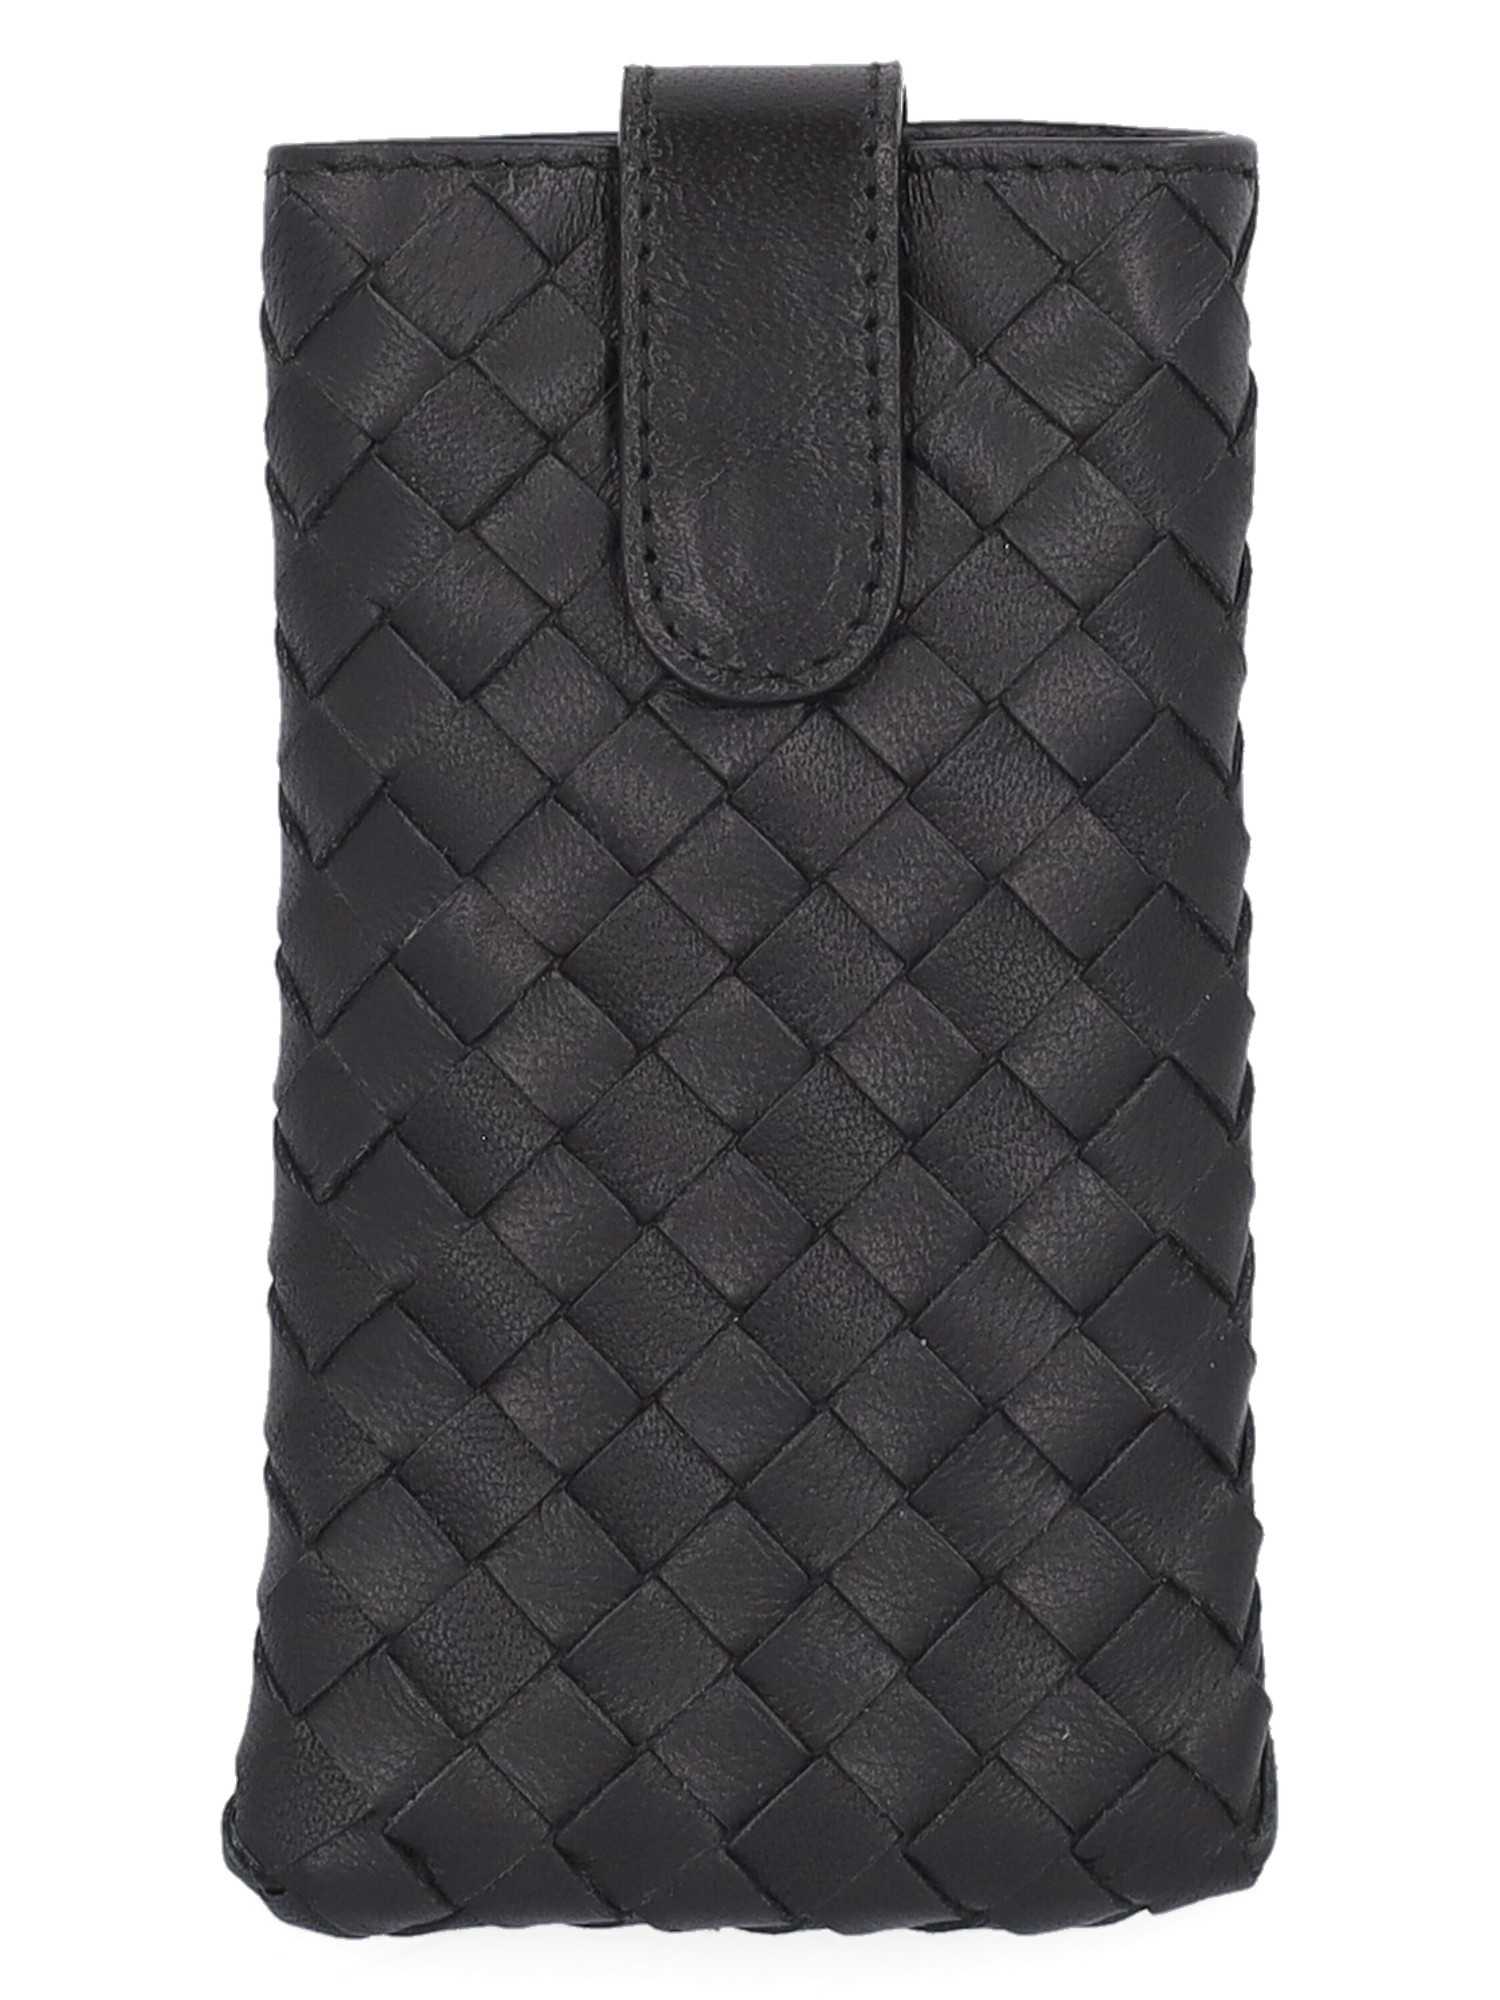 Technologie Pour Femme - Bottega Veneta - En Leather Black - Taille:  -